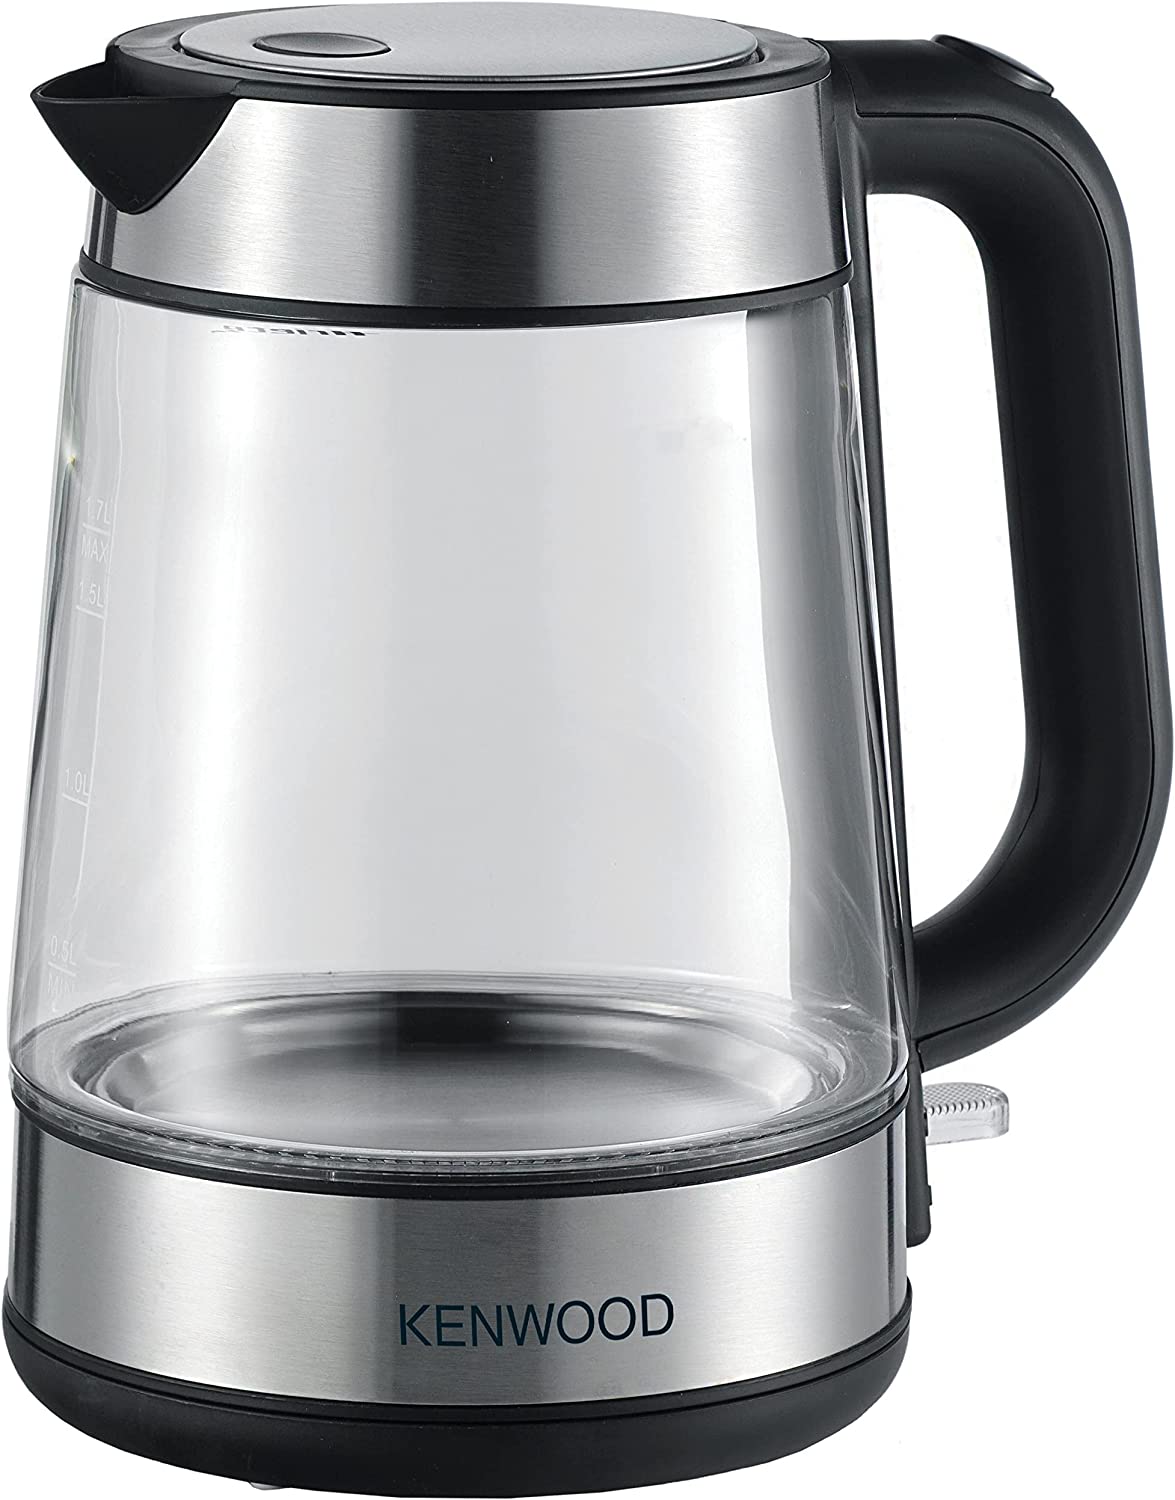 KENWOOD Glass Kettle 1.7L Cordless Electric Kettle 2200W with Auto Shut-Off & Removable Mesh Filter غلاية كهربائية بدون سلك سعة 1.7 لتر 2200 واط مع فلتر شبكي ذاتي الاغلاق وقابل للازالة شفاف / فضي/اسود